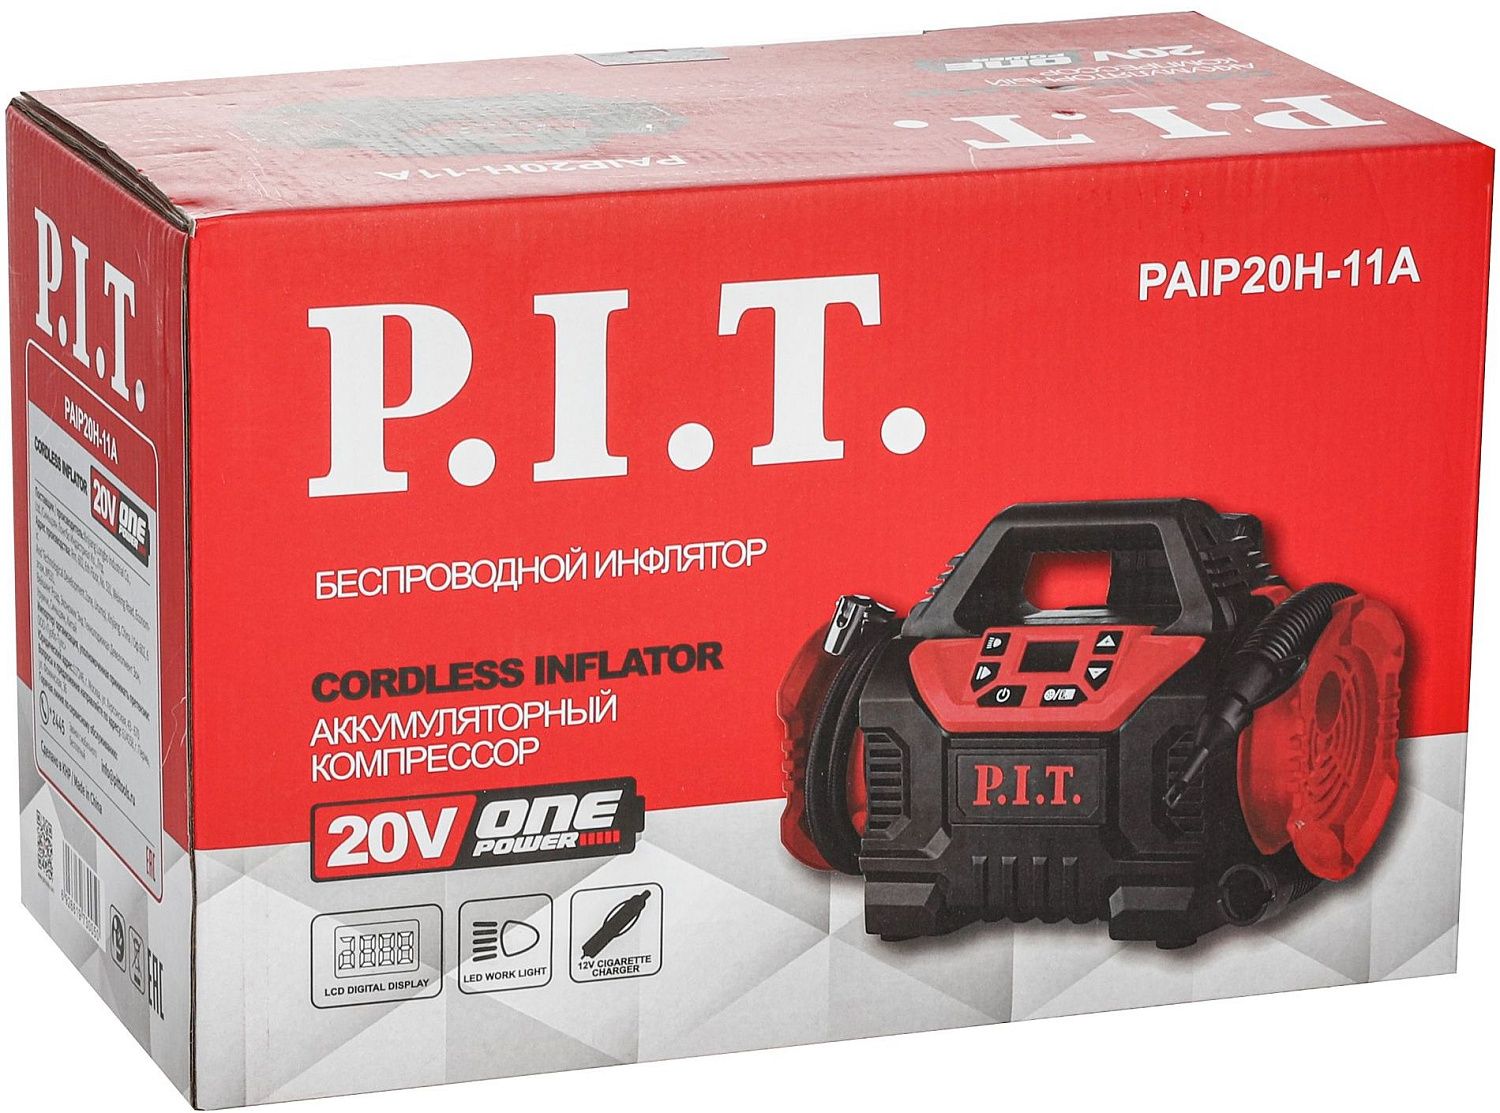 Компрессор аккумуляторный P.I.T. PAIP20H-11A P.I.T. от магазина Tehnorama